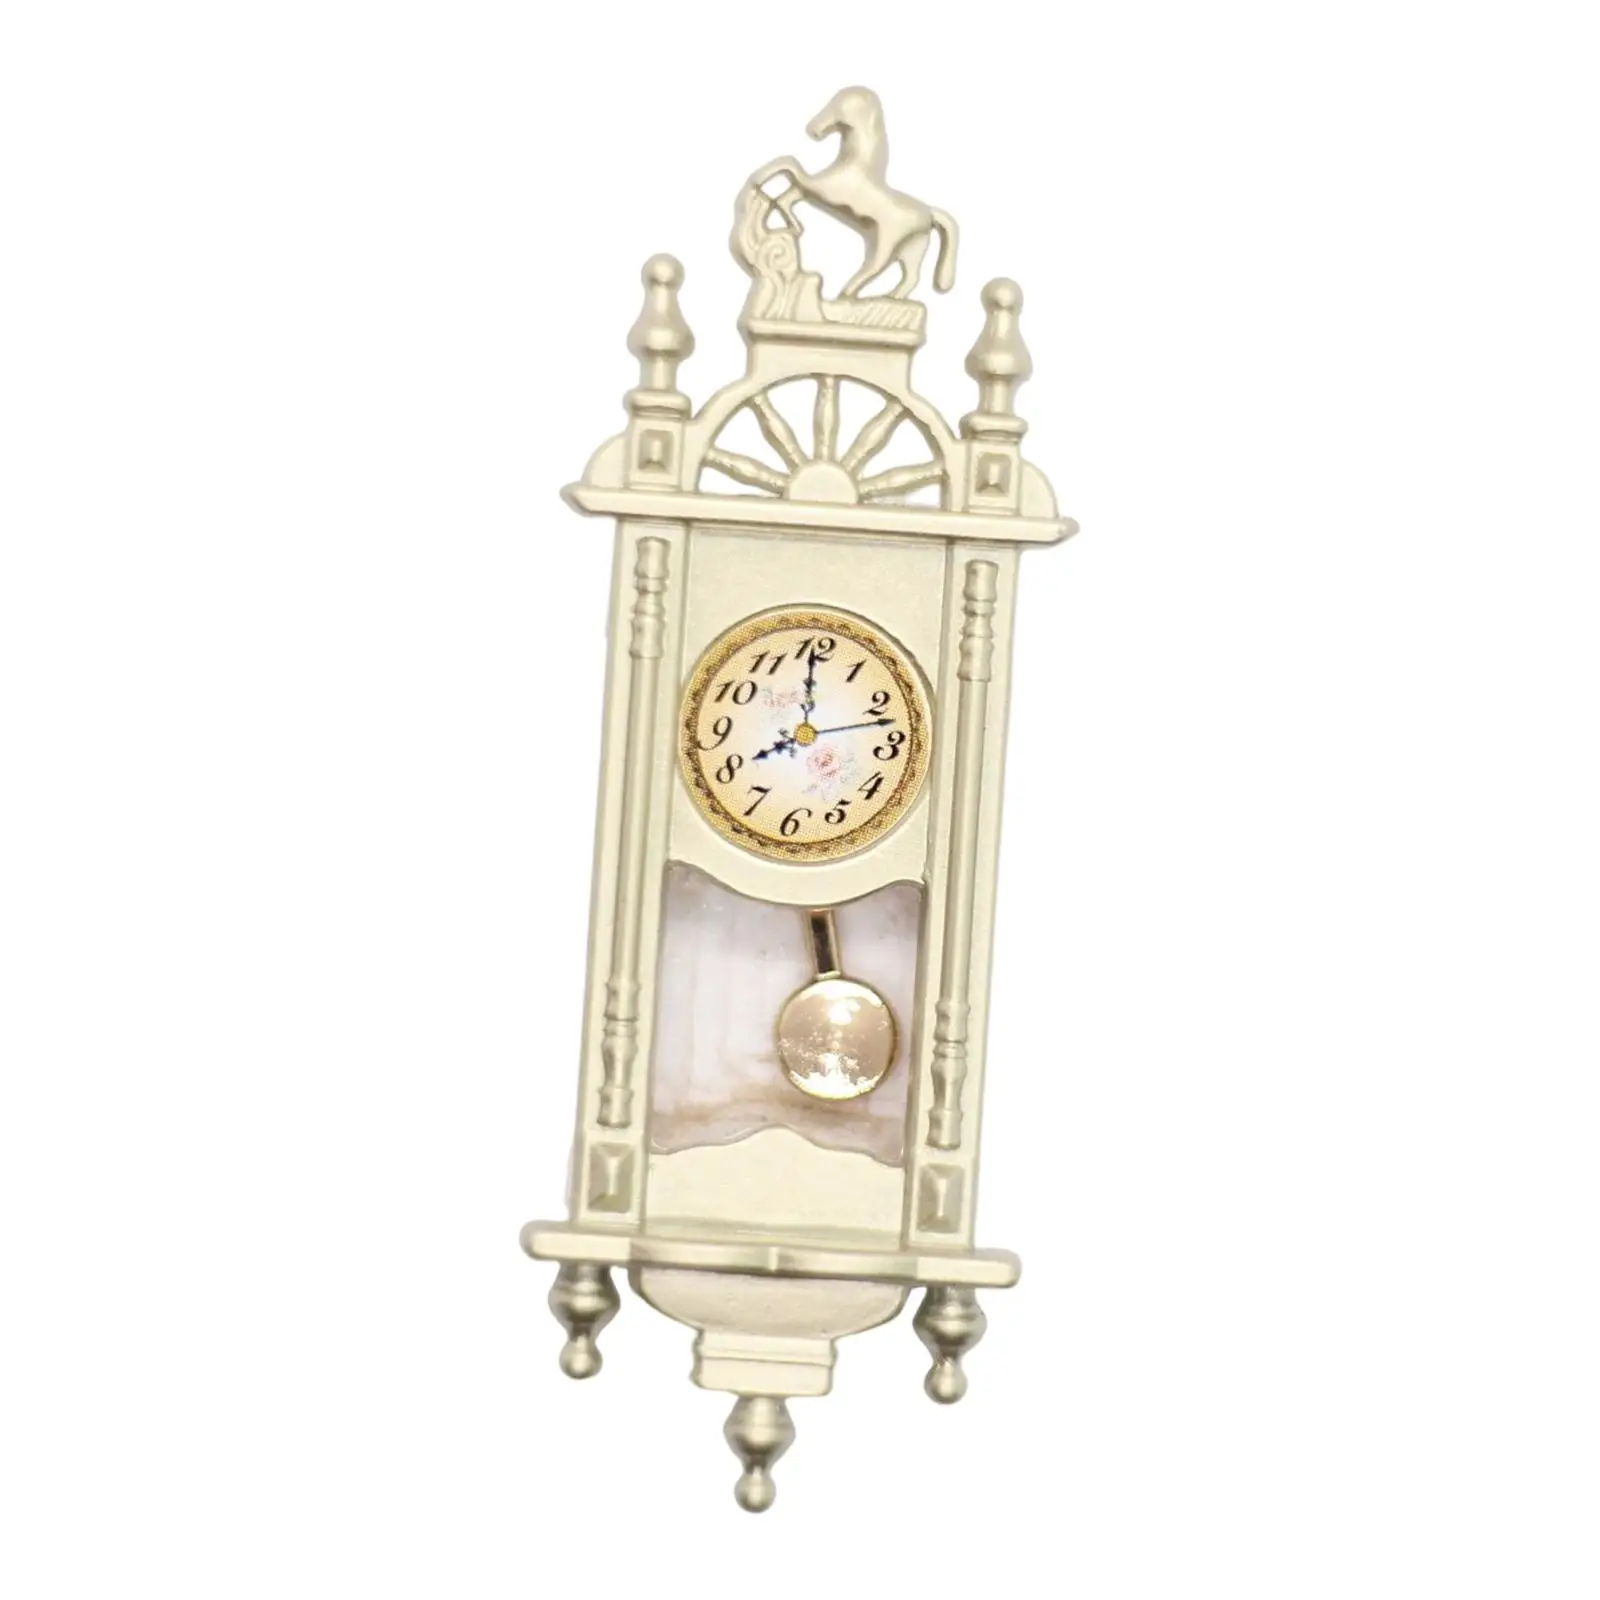 Dollhouse Wall Clock, Vintage Style Clock Model for 1:12 Scale Dollhouse Minaiture Decoration